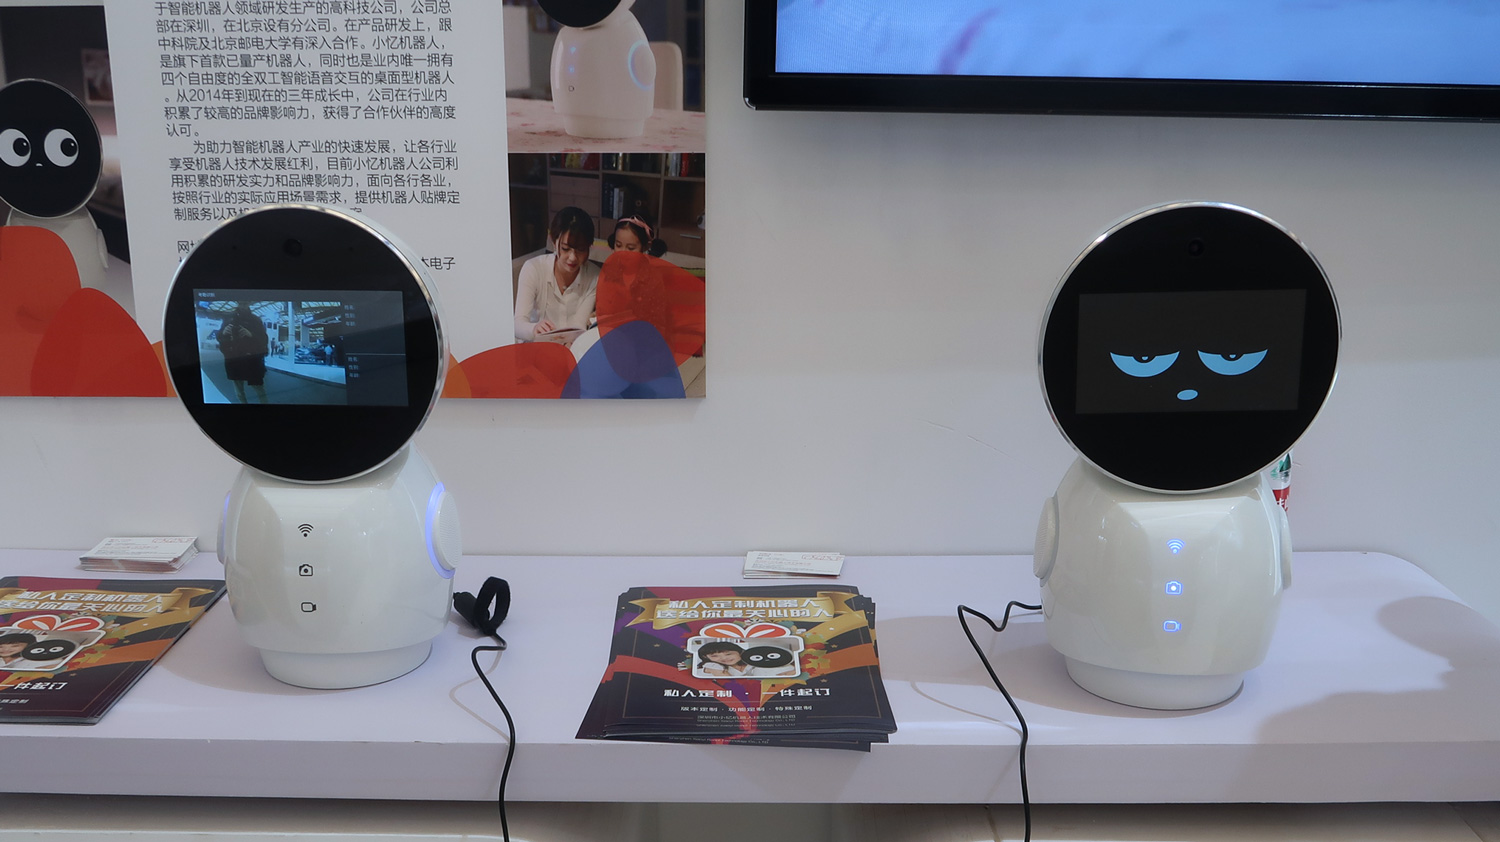 awe Shanghai 2018 robotic virtual assistant